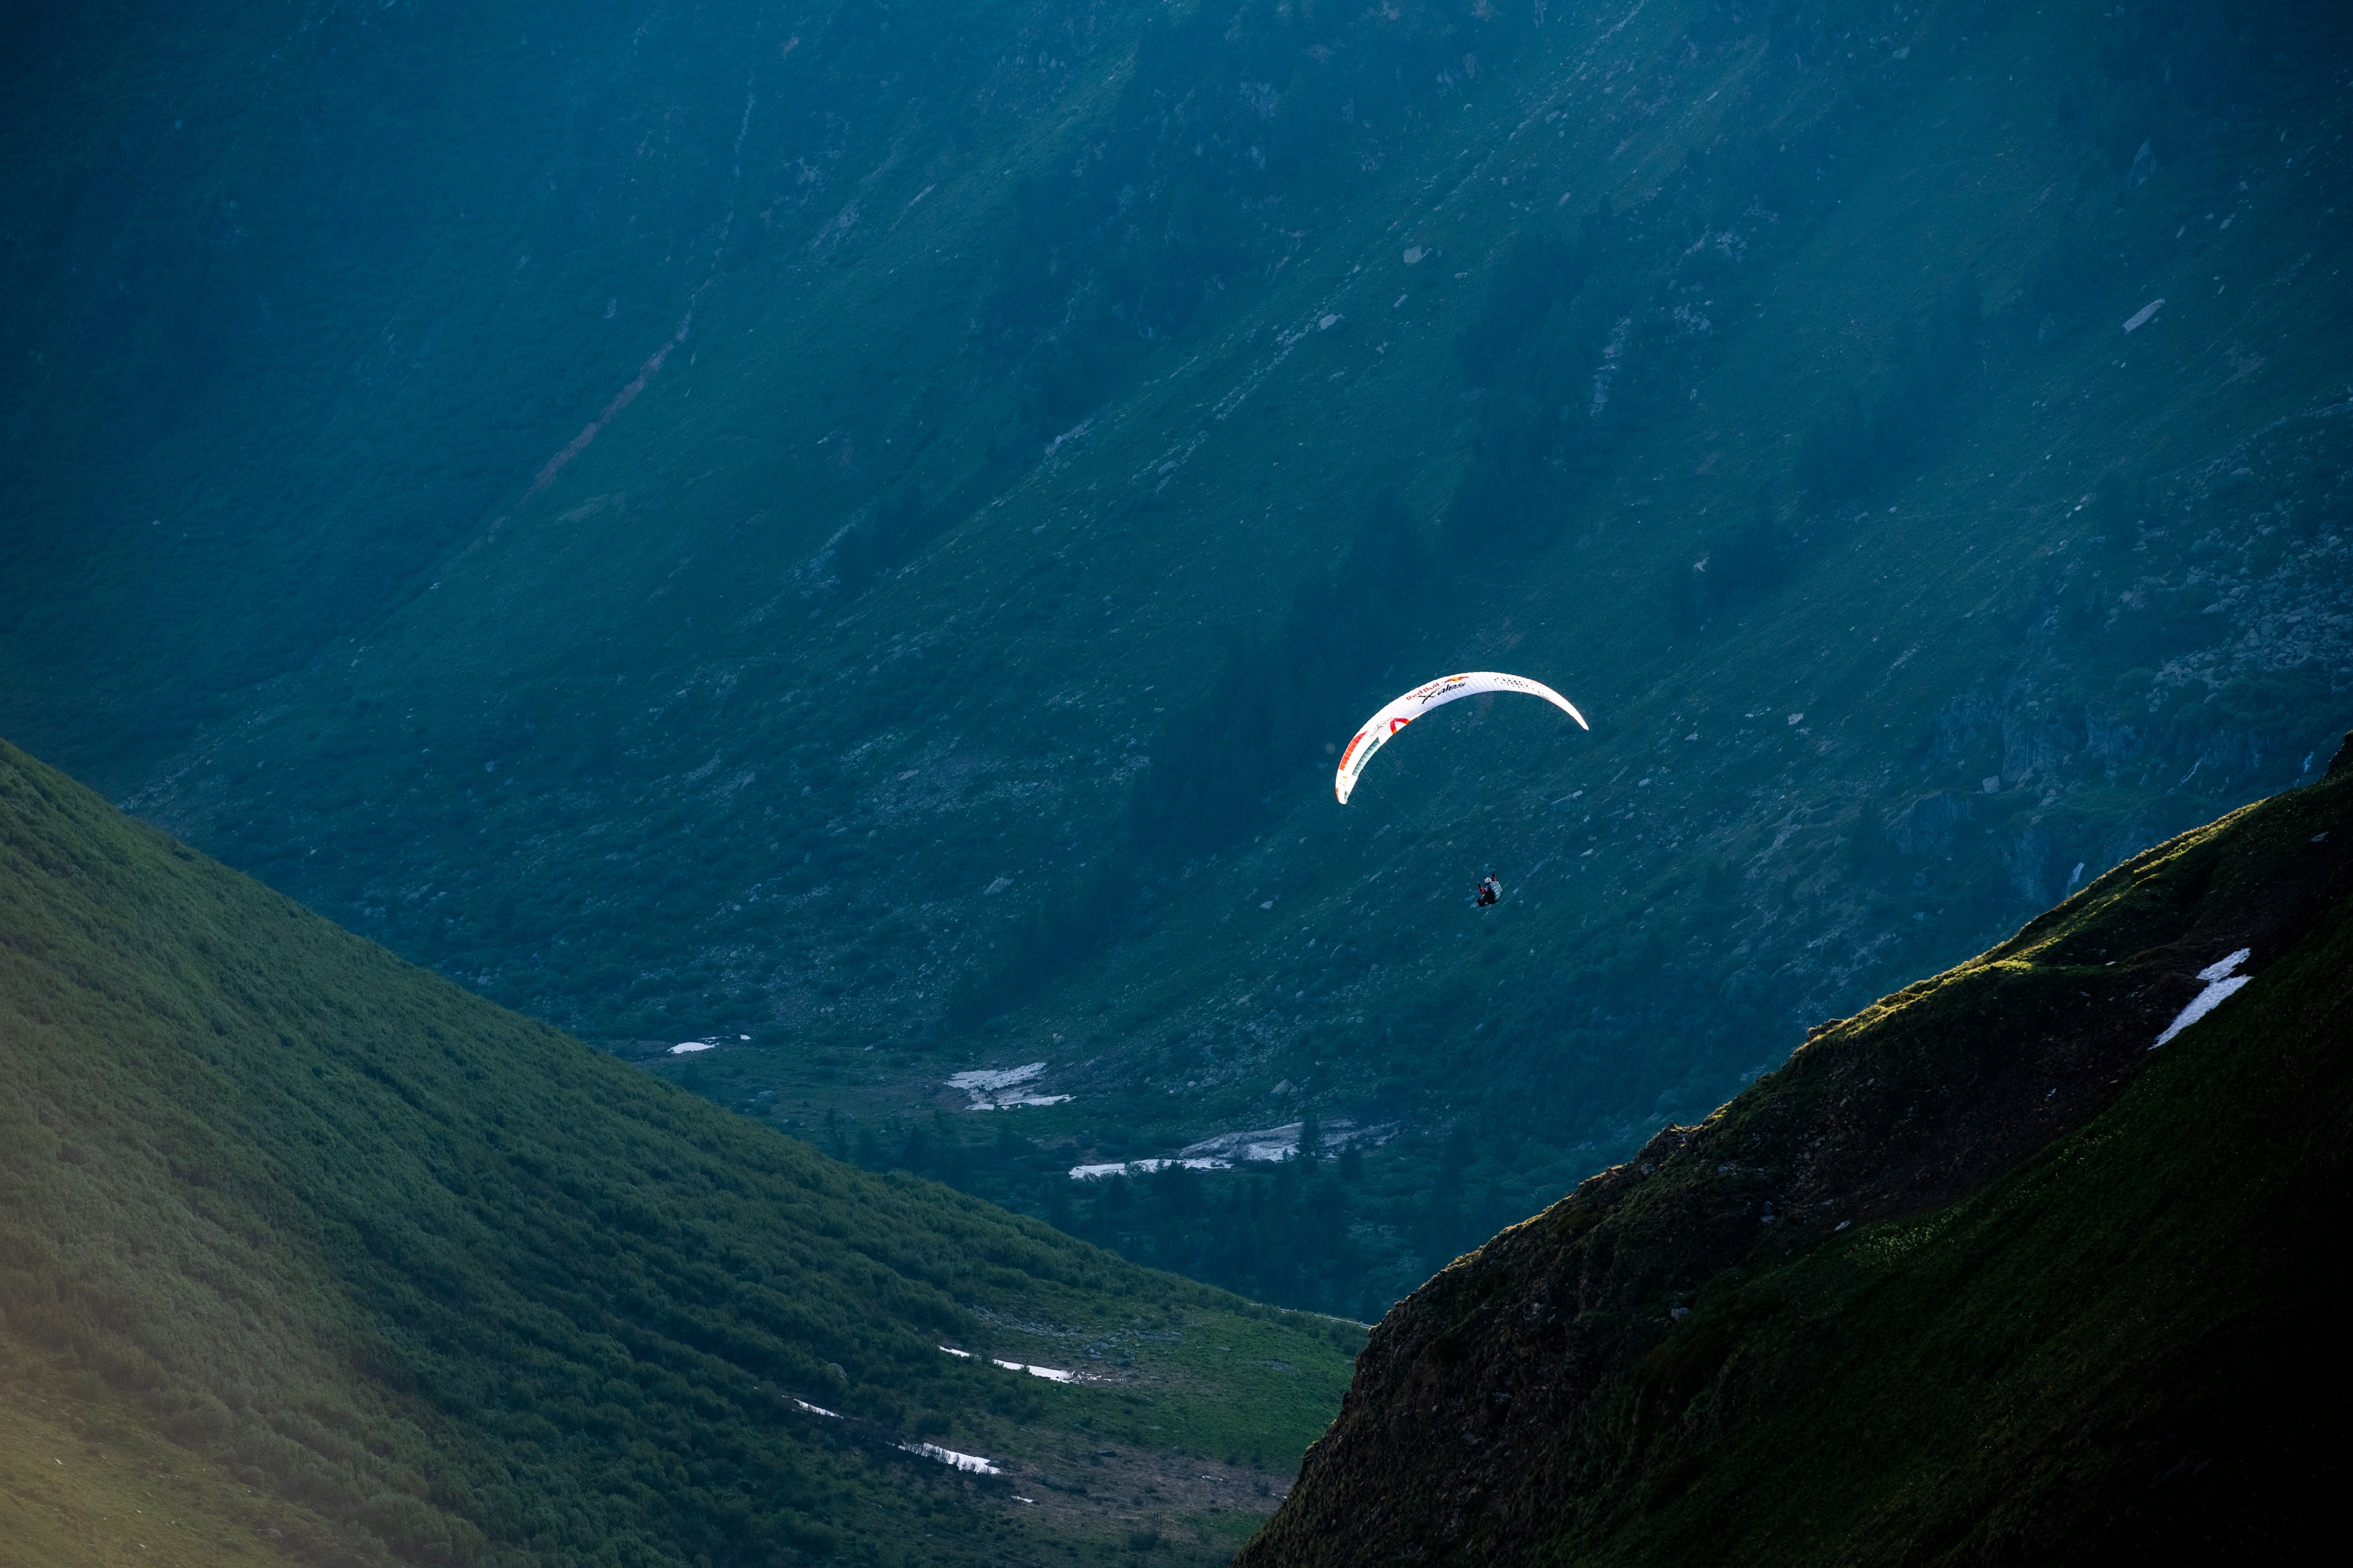 MEX flying during X-Alps on Furkapass, Switzerland on June 26, 2021